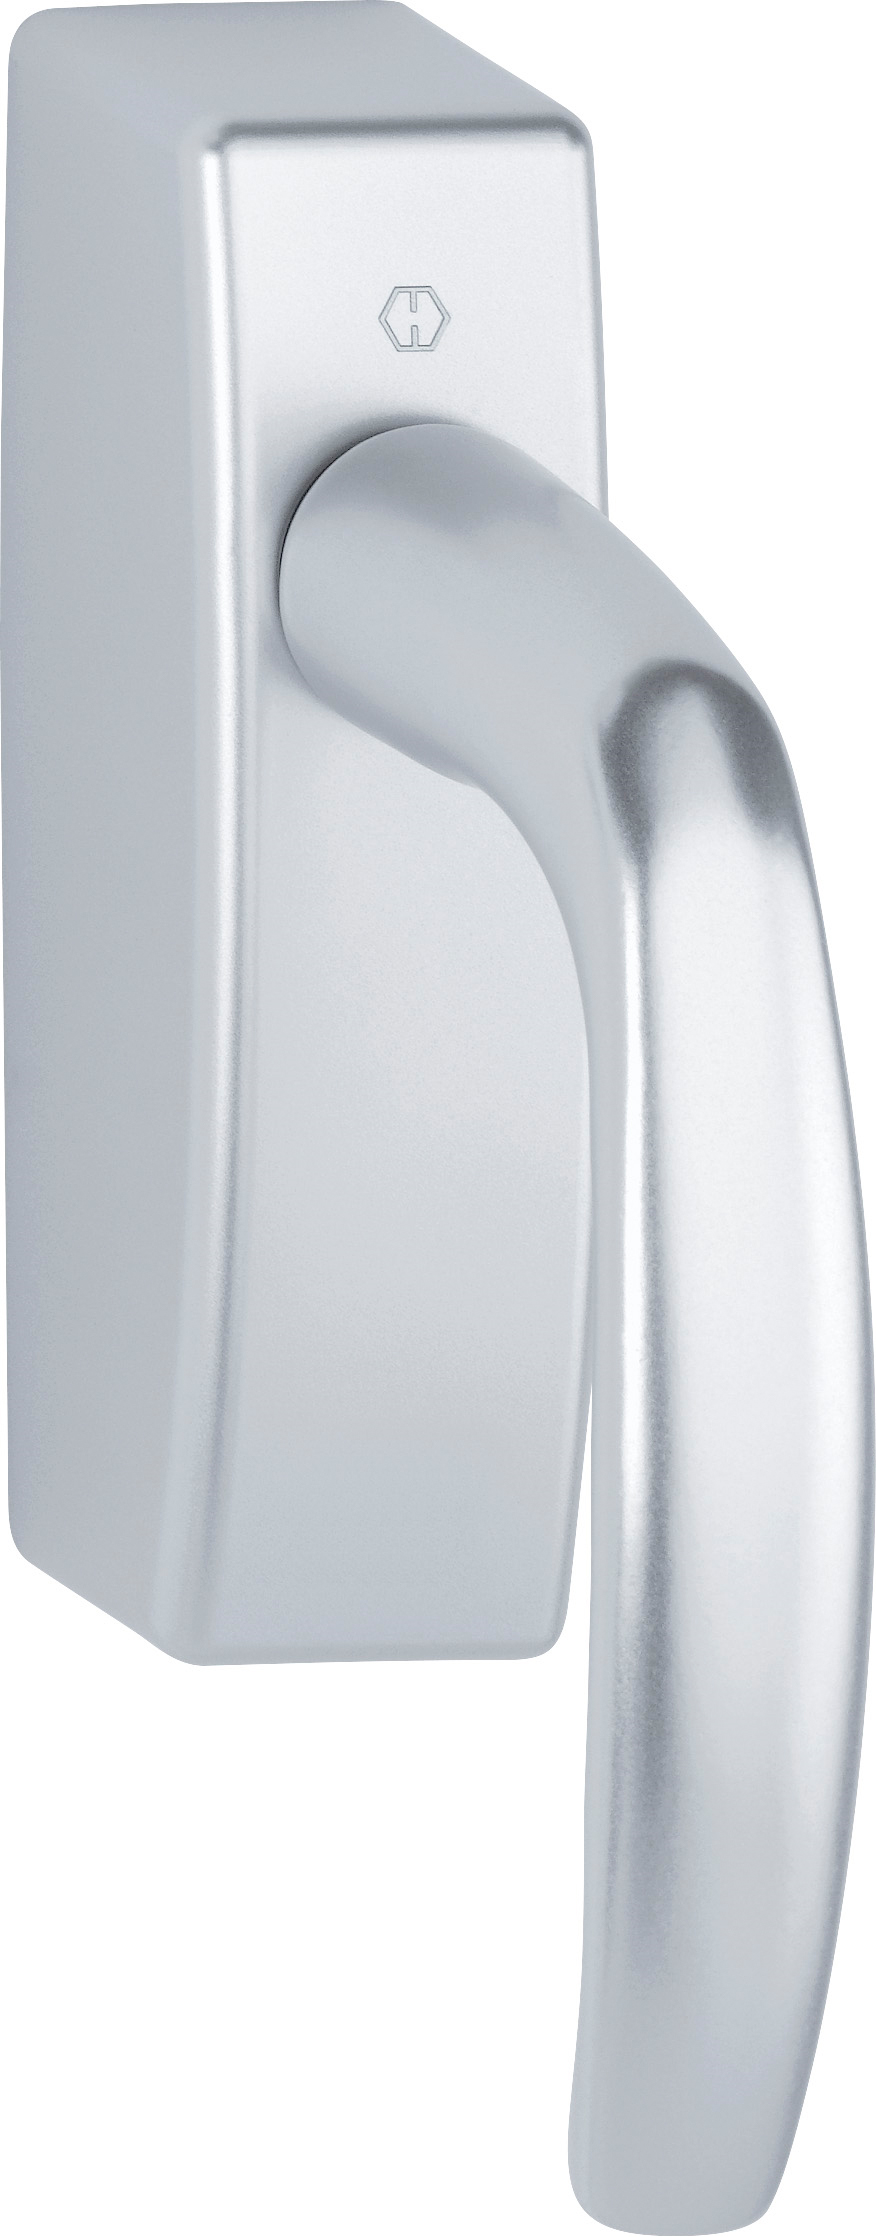 OPUS eWindow handgreep Atlanta aluminium zilver, 28 mm pin, bidirectioneel